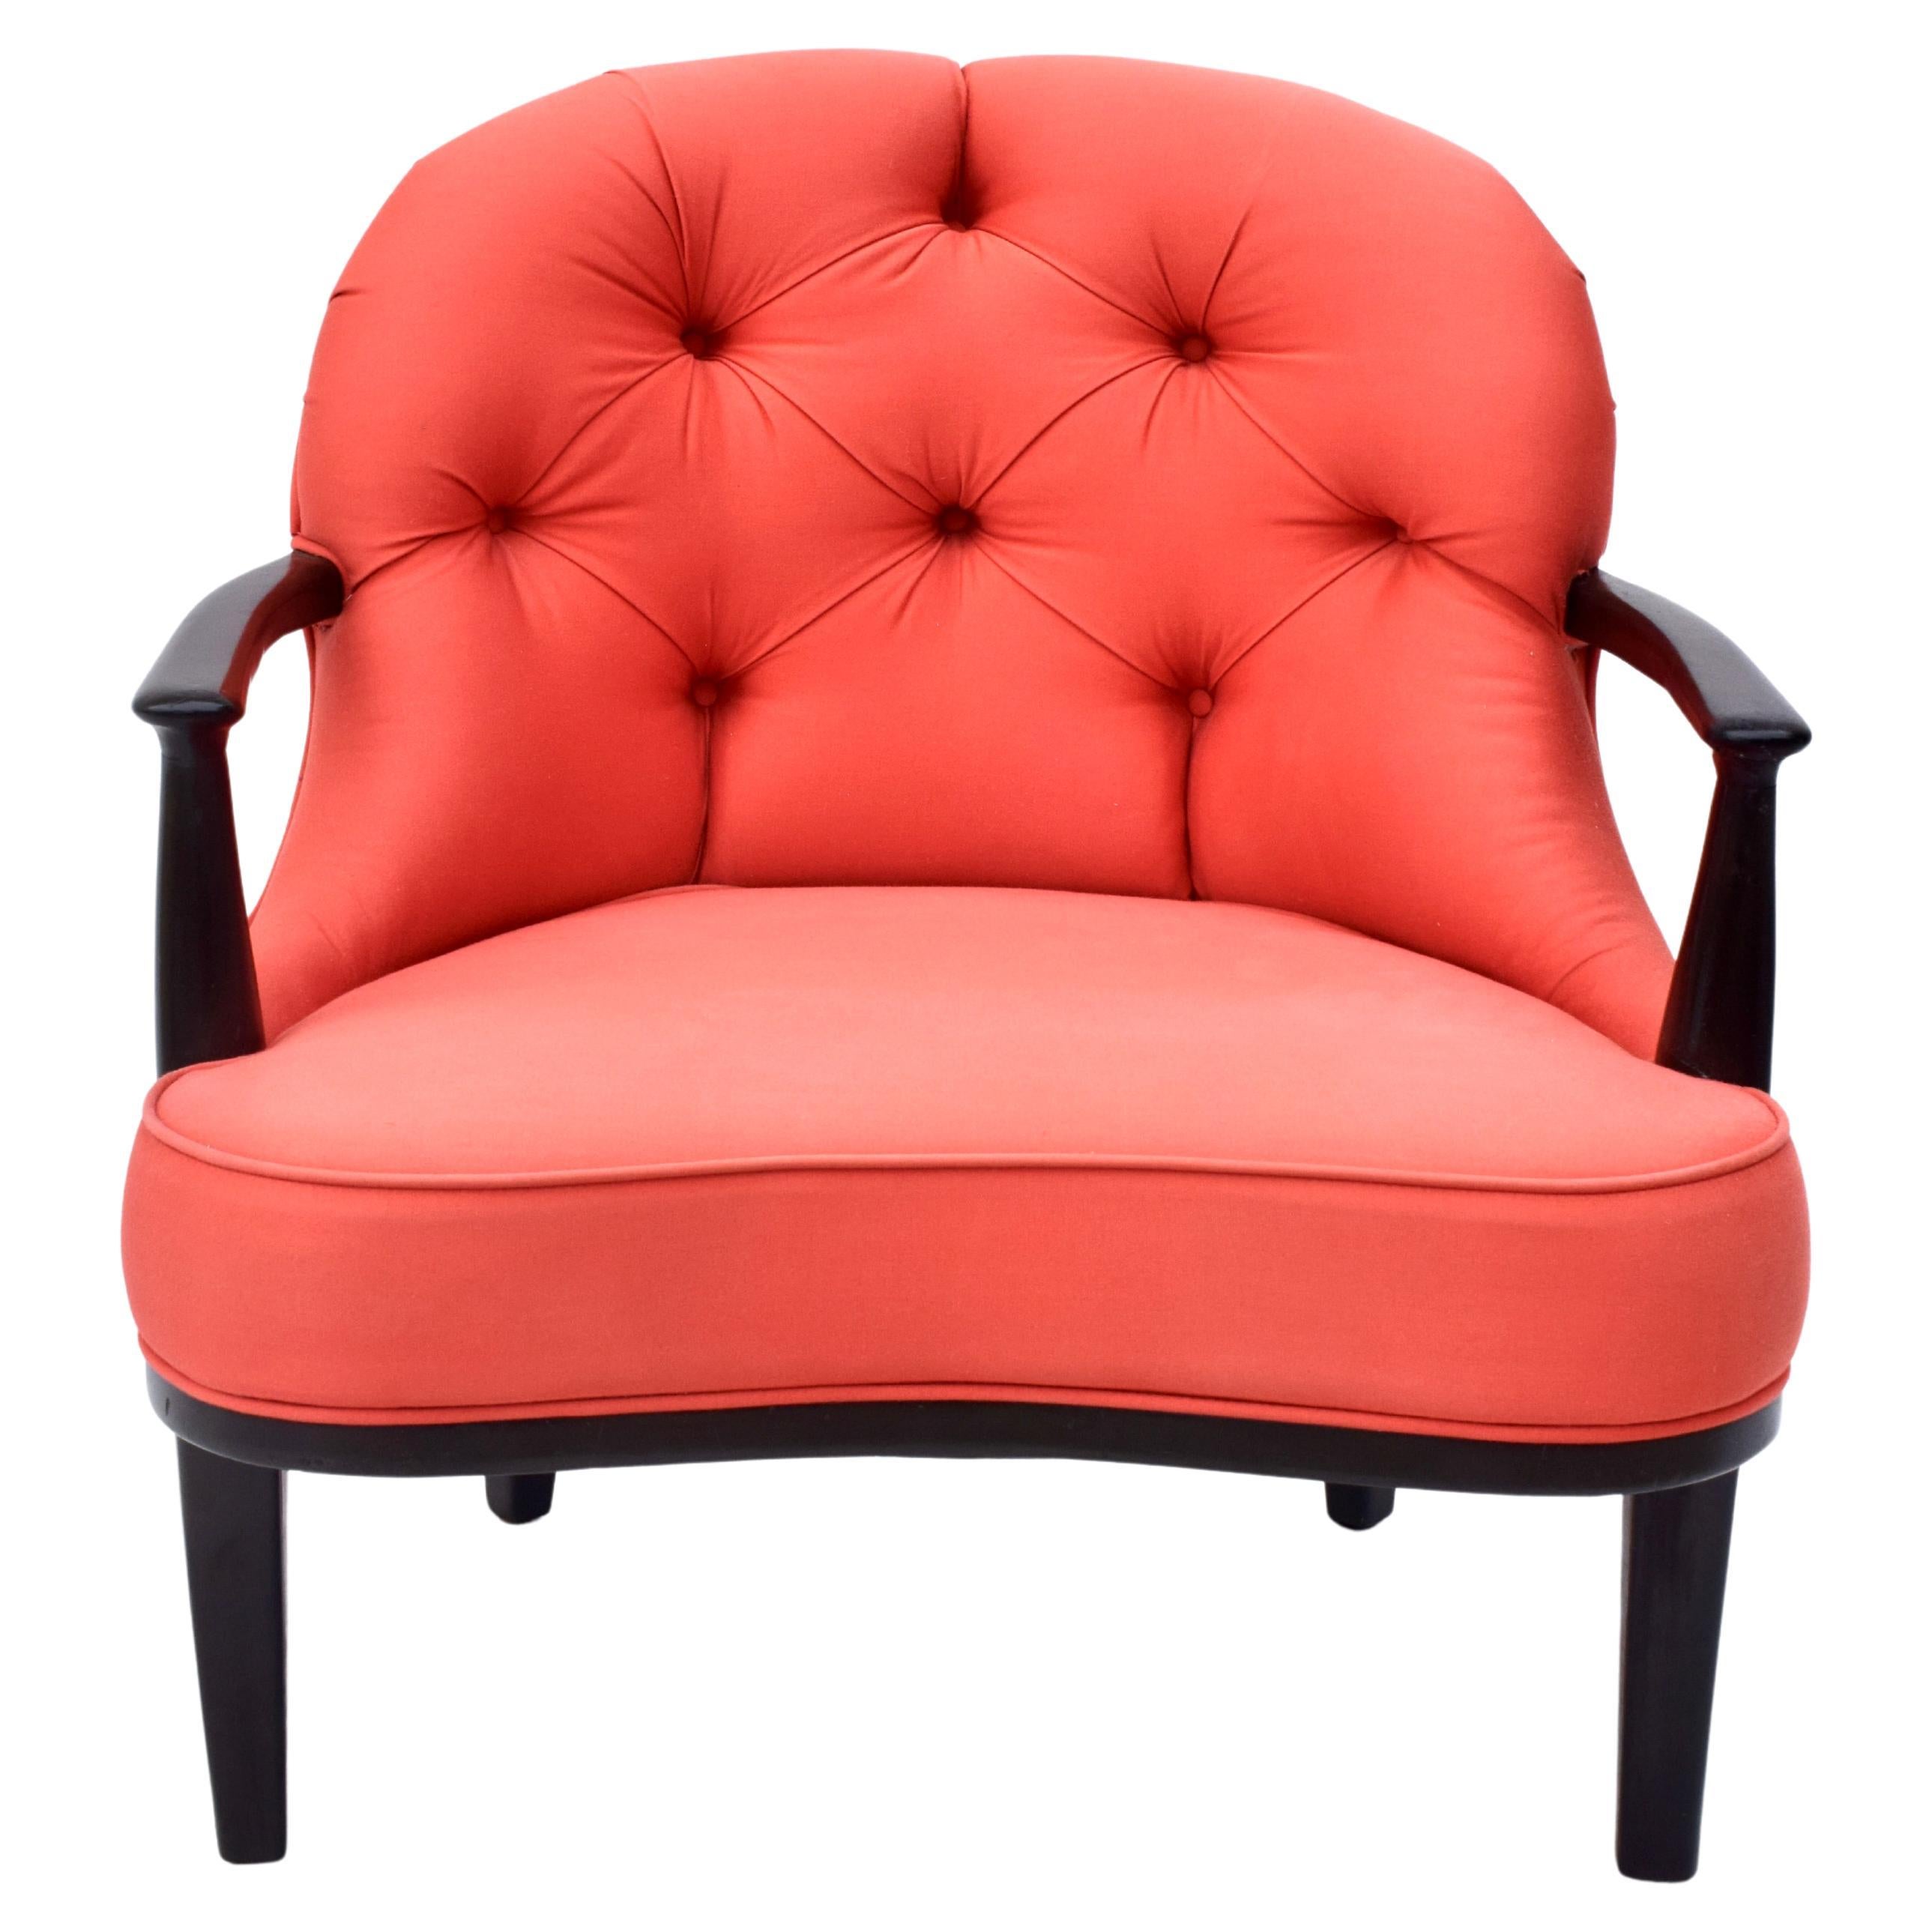 Edward Wormley for Dunbar Janus Collection Lounge Chair